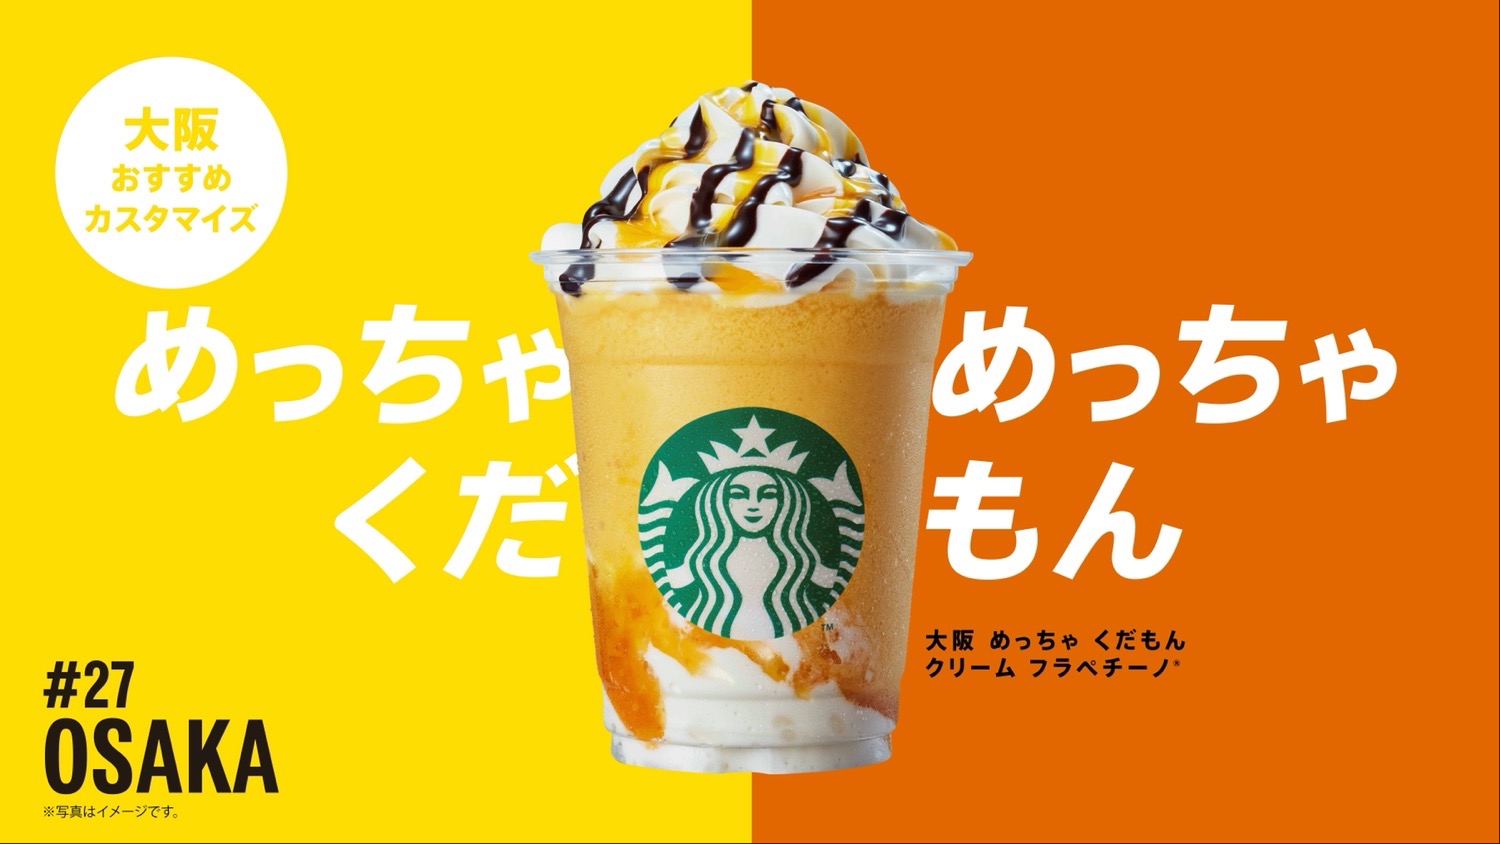 Starbucks 47 jimoto 14 04